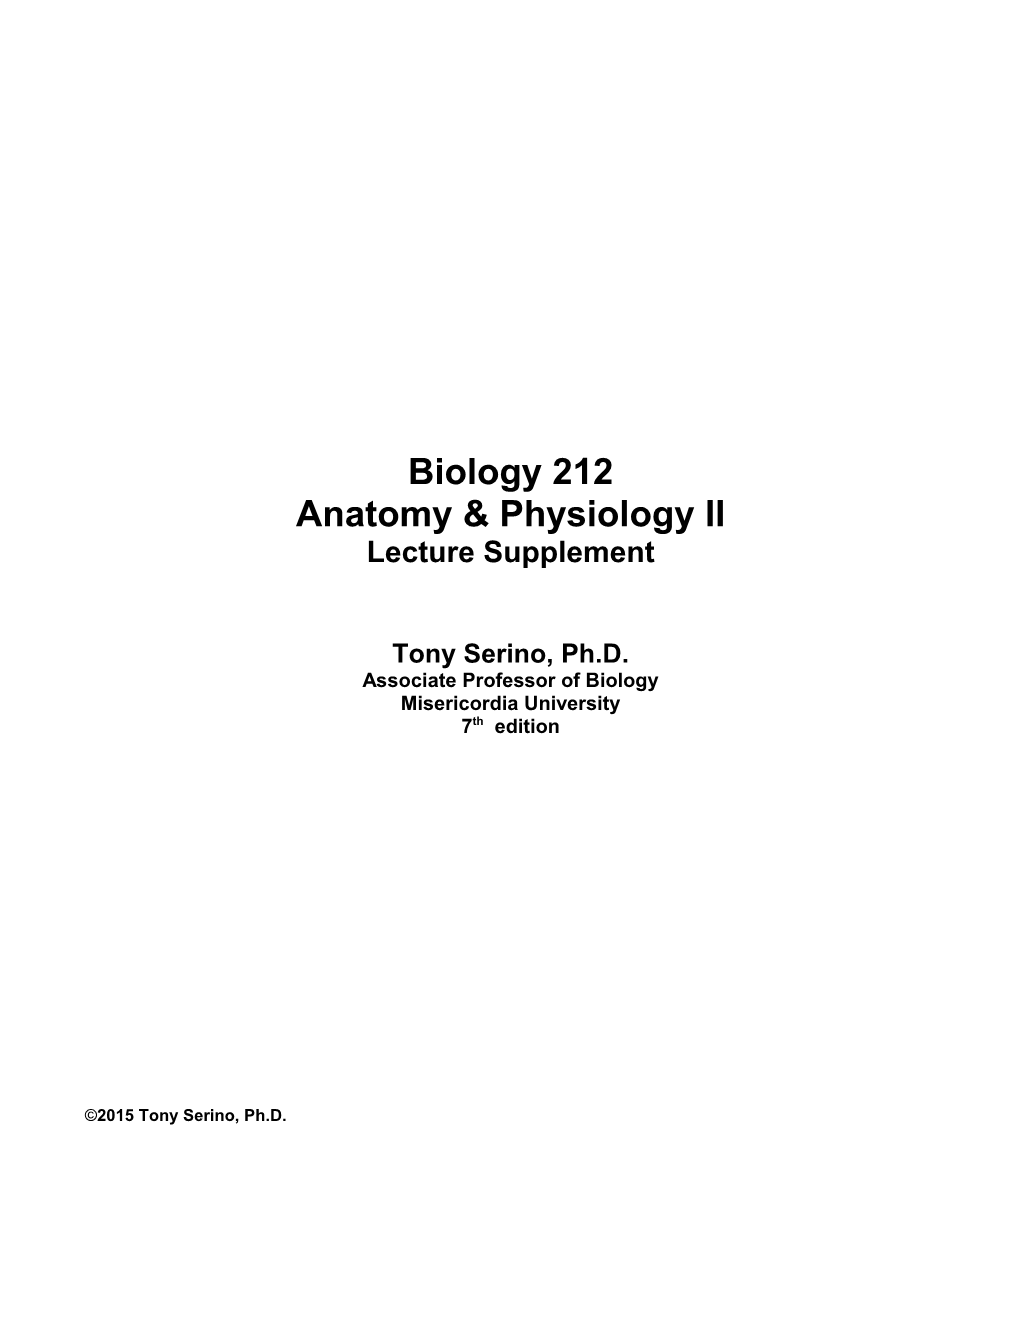 Anatomy & Physiology II